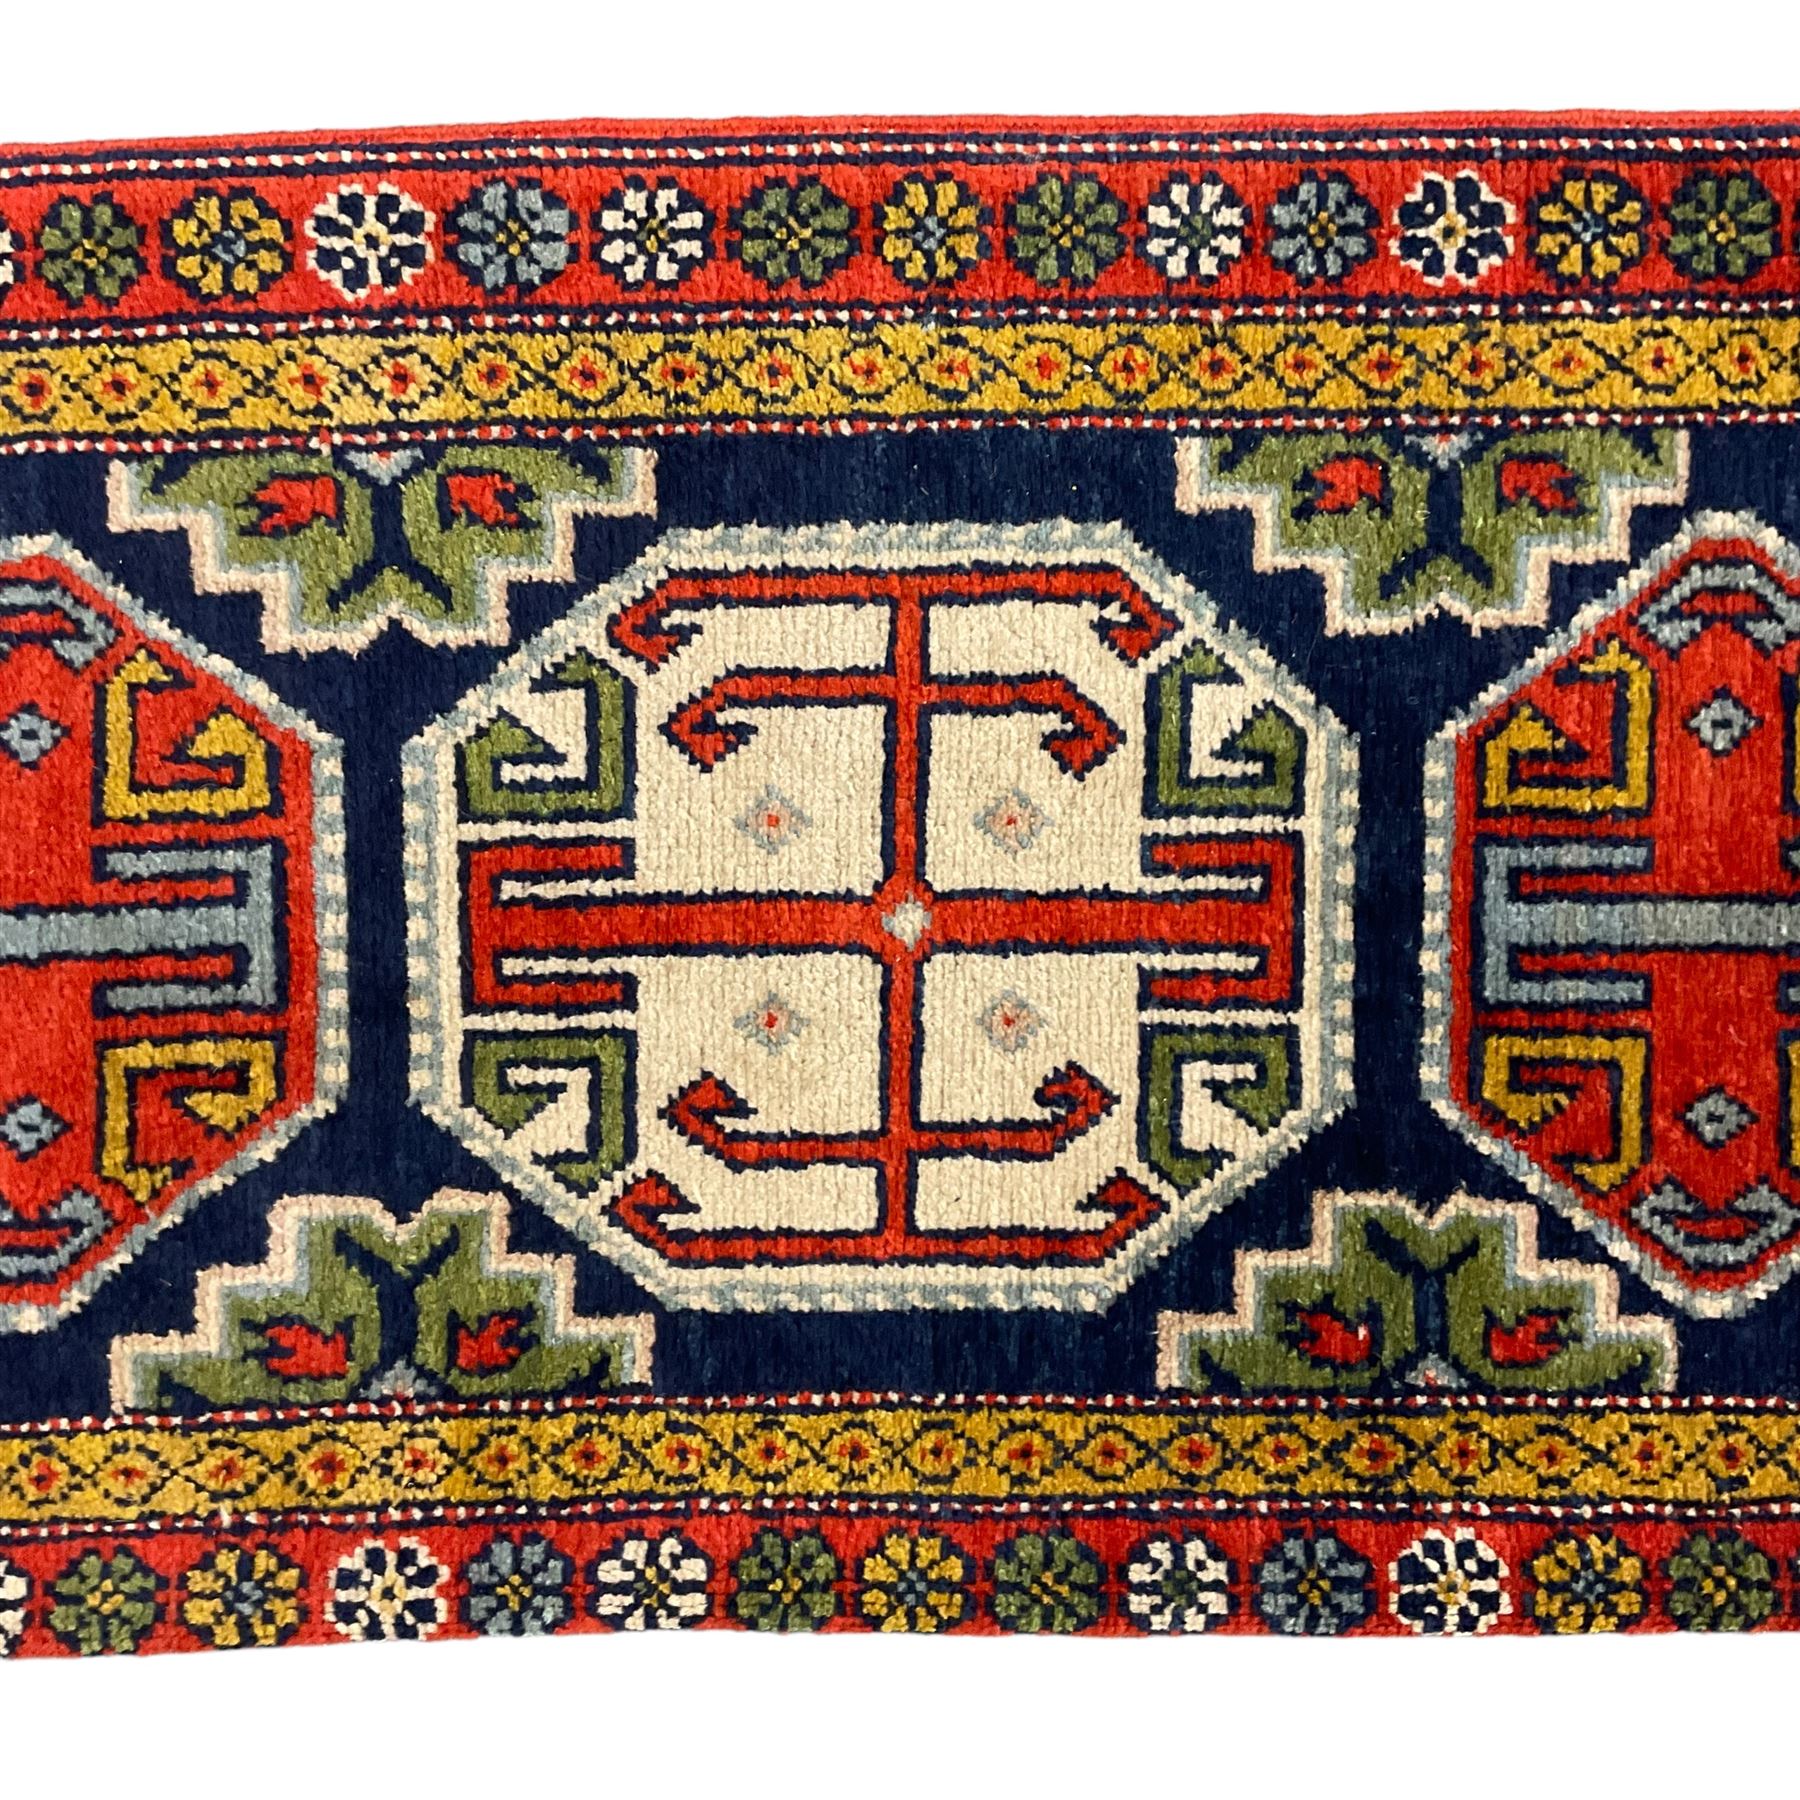 Small Persian indigo ground rug or mat - Image 2 of 5